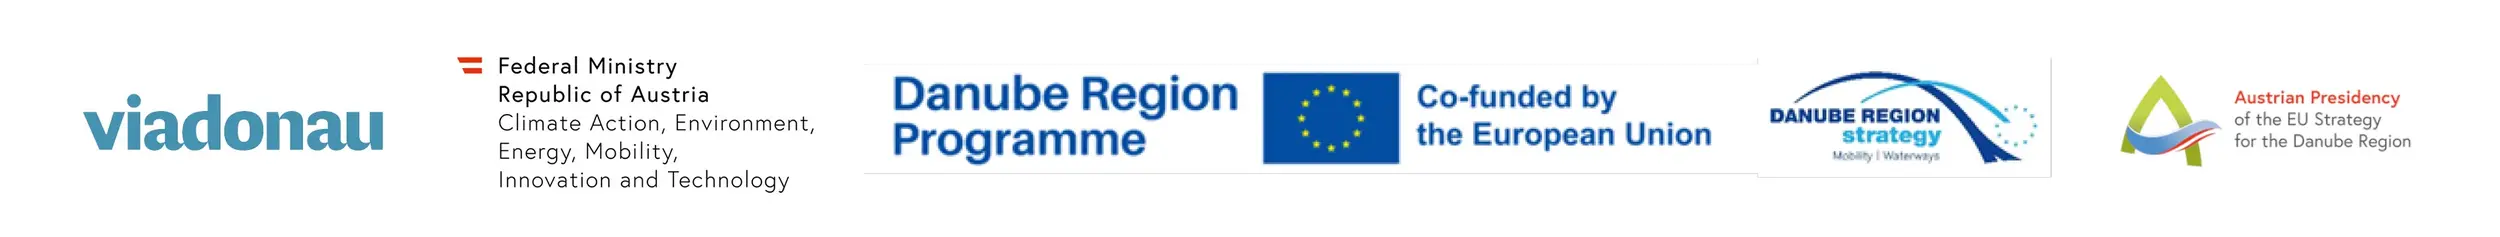 Logos viadonau, BMK, Danube Region Programme EU, EU Strategy for the Danube Region, Austrian Presidency for the Danube Strategy